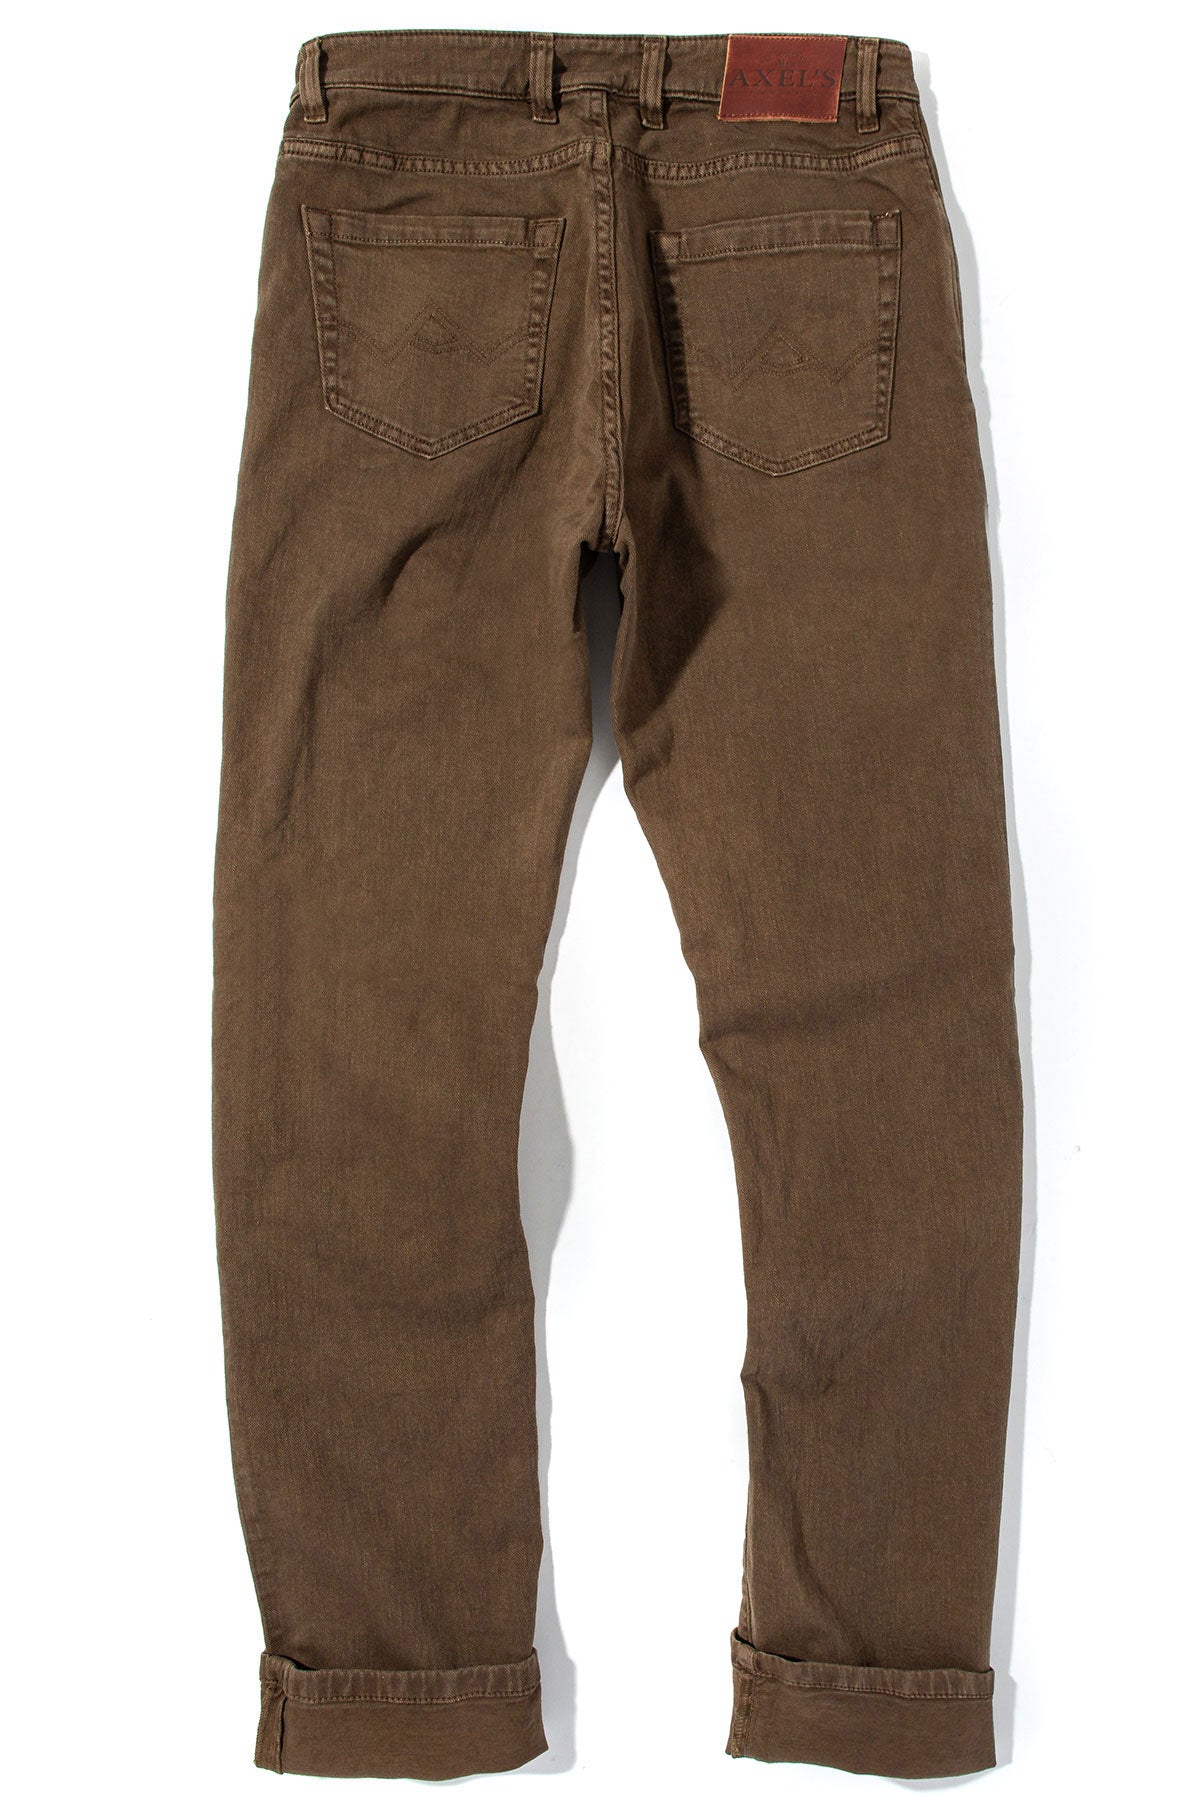 Taos Slim Vintage Denim in Liquirizia | Mens - Pants - 5 Pocket | Axels Premium Denim